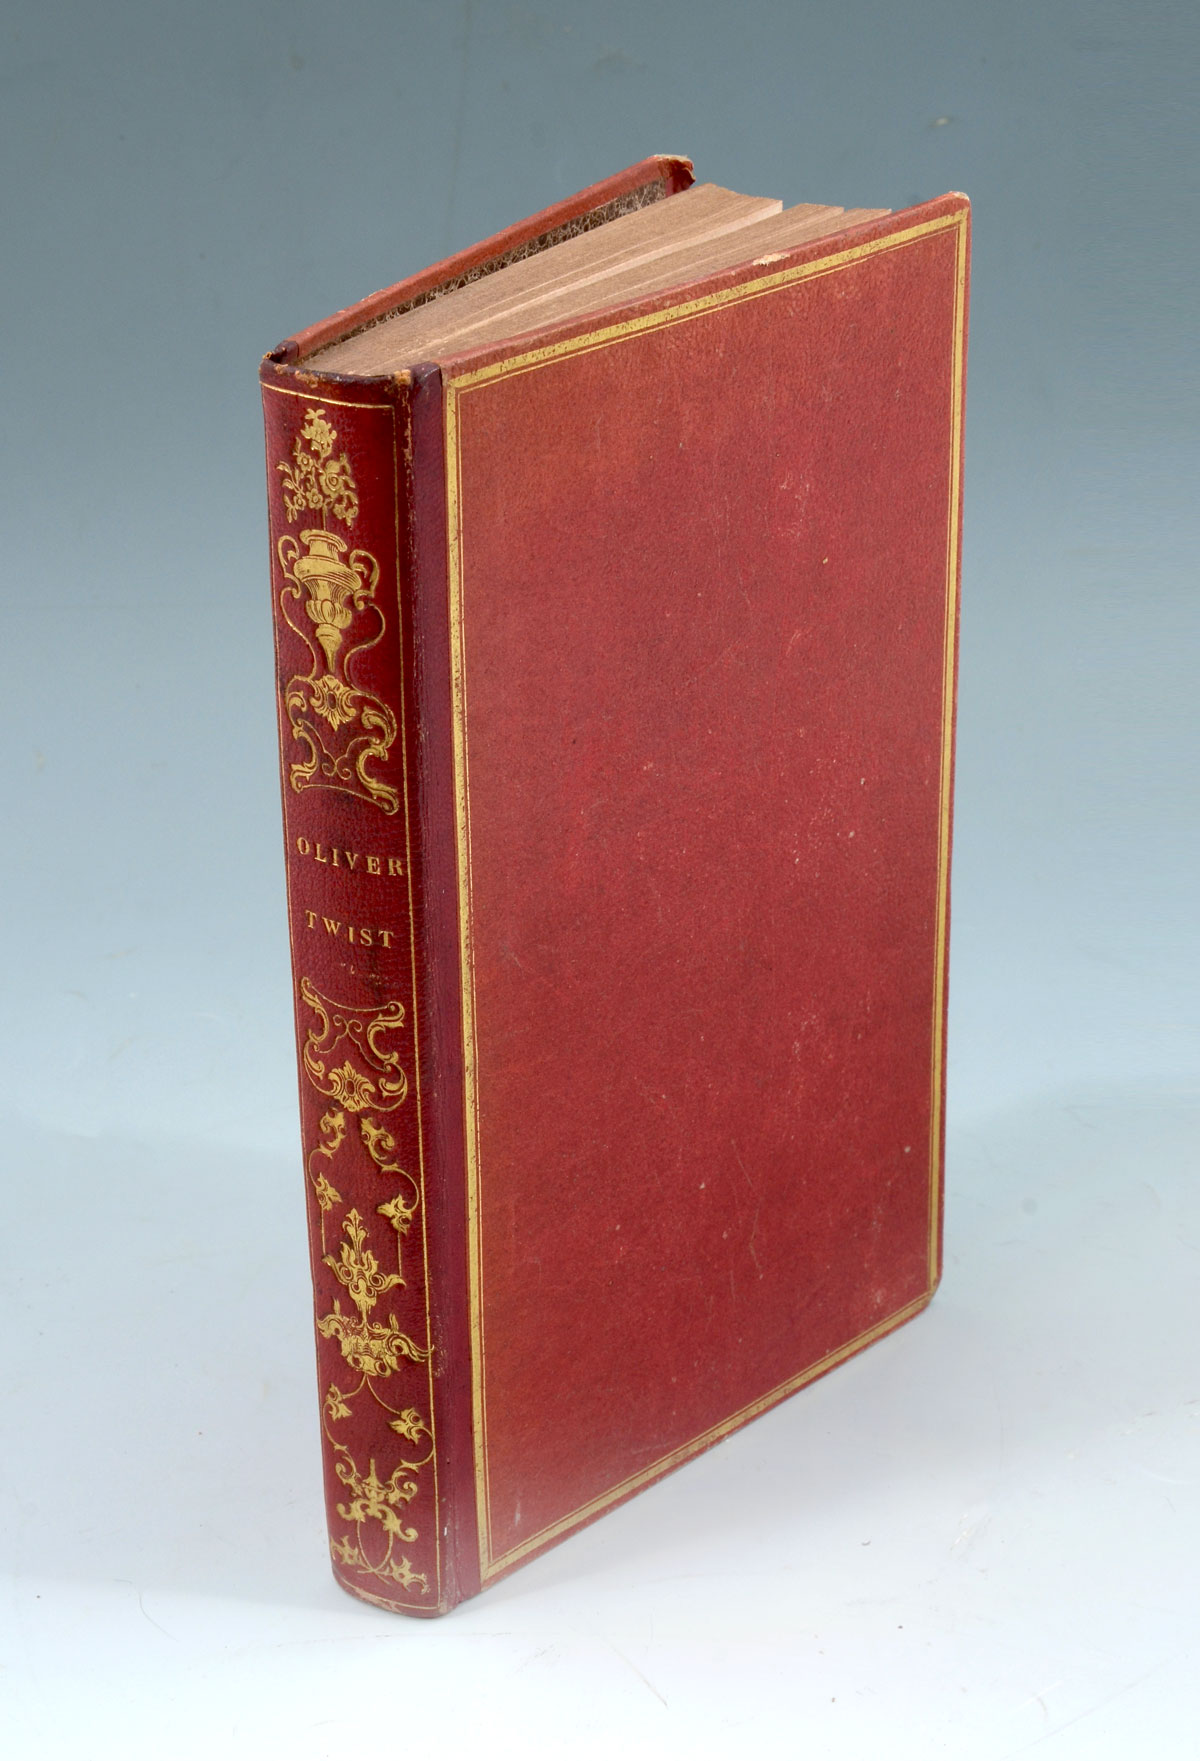 1839 OLIVER TWIST BOOK Parisian 36f430